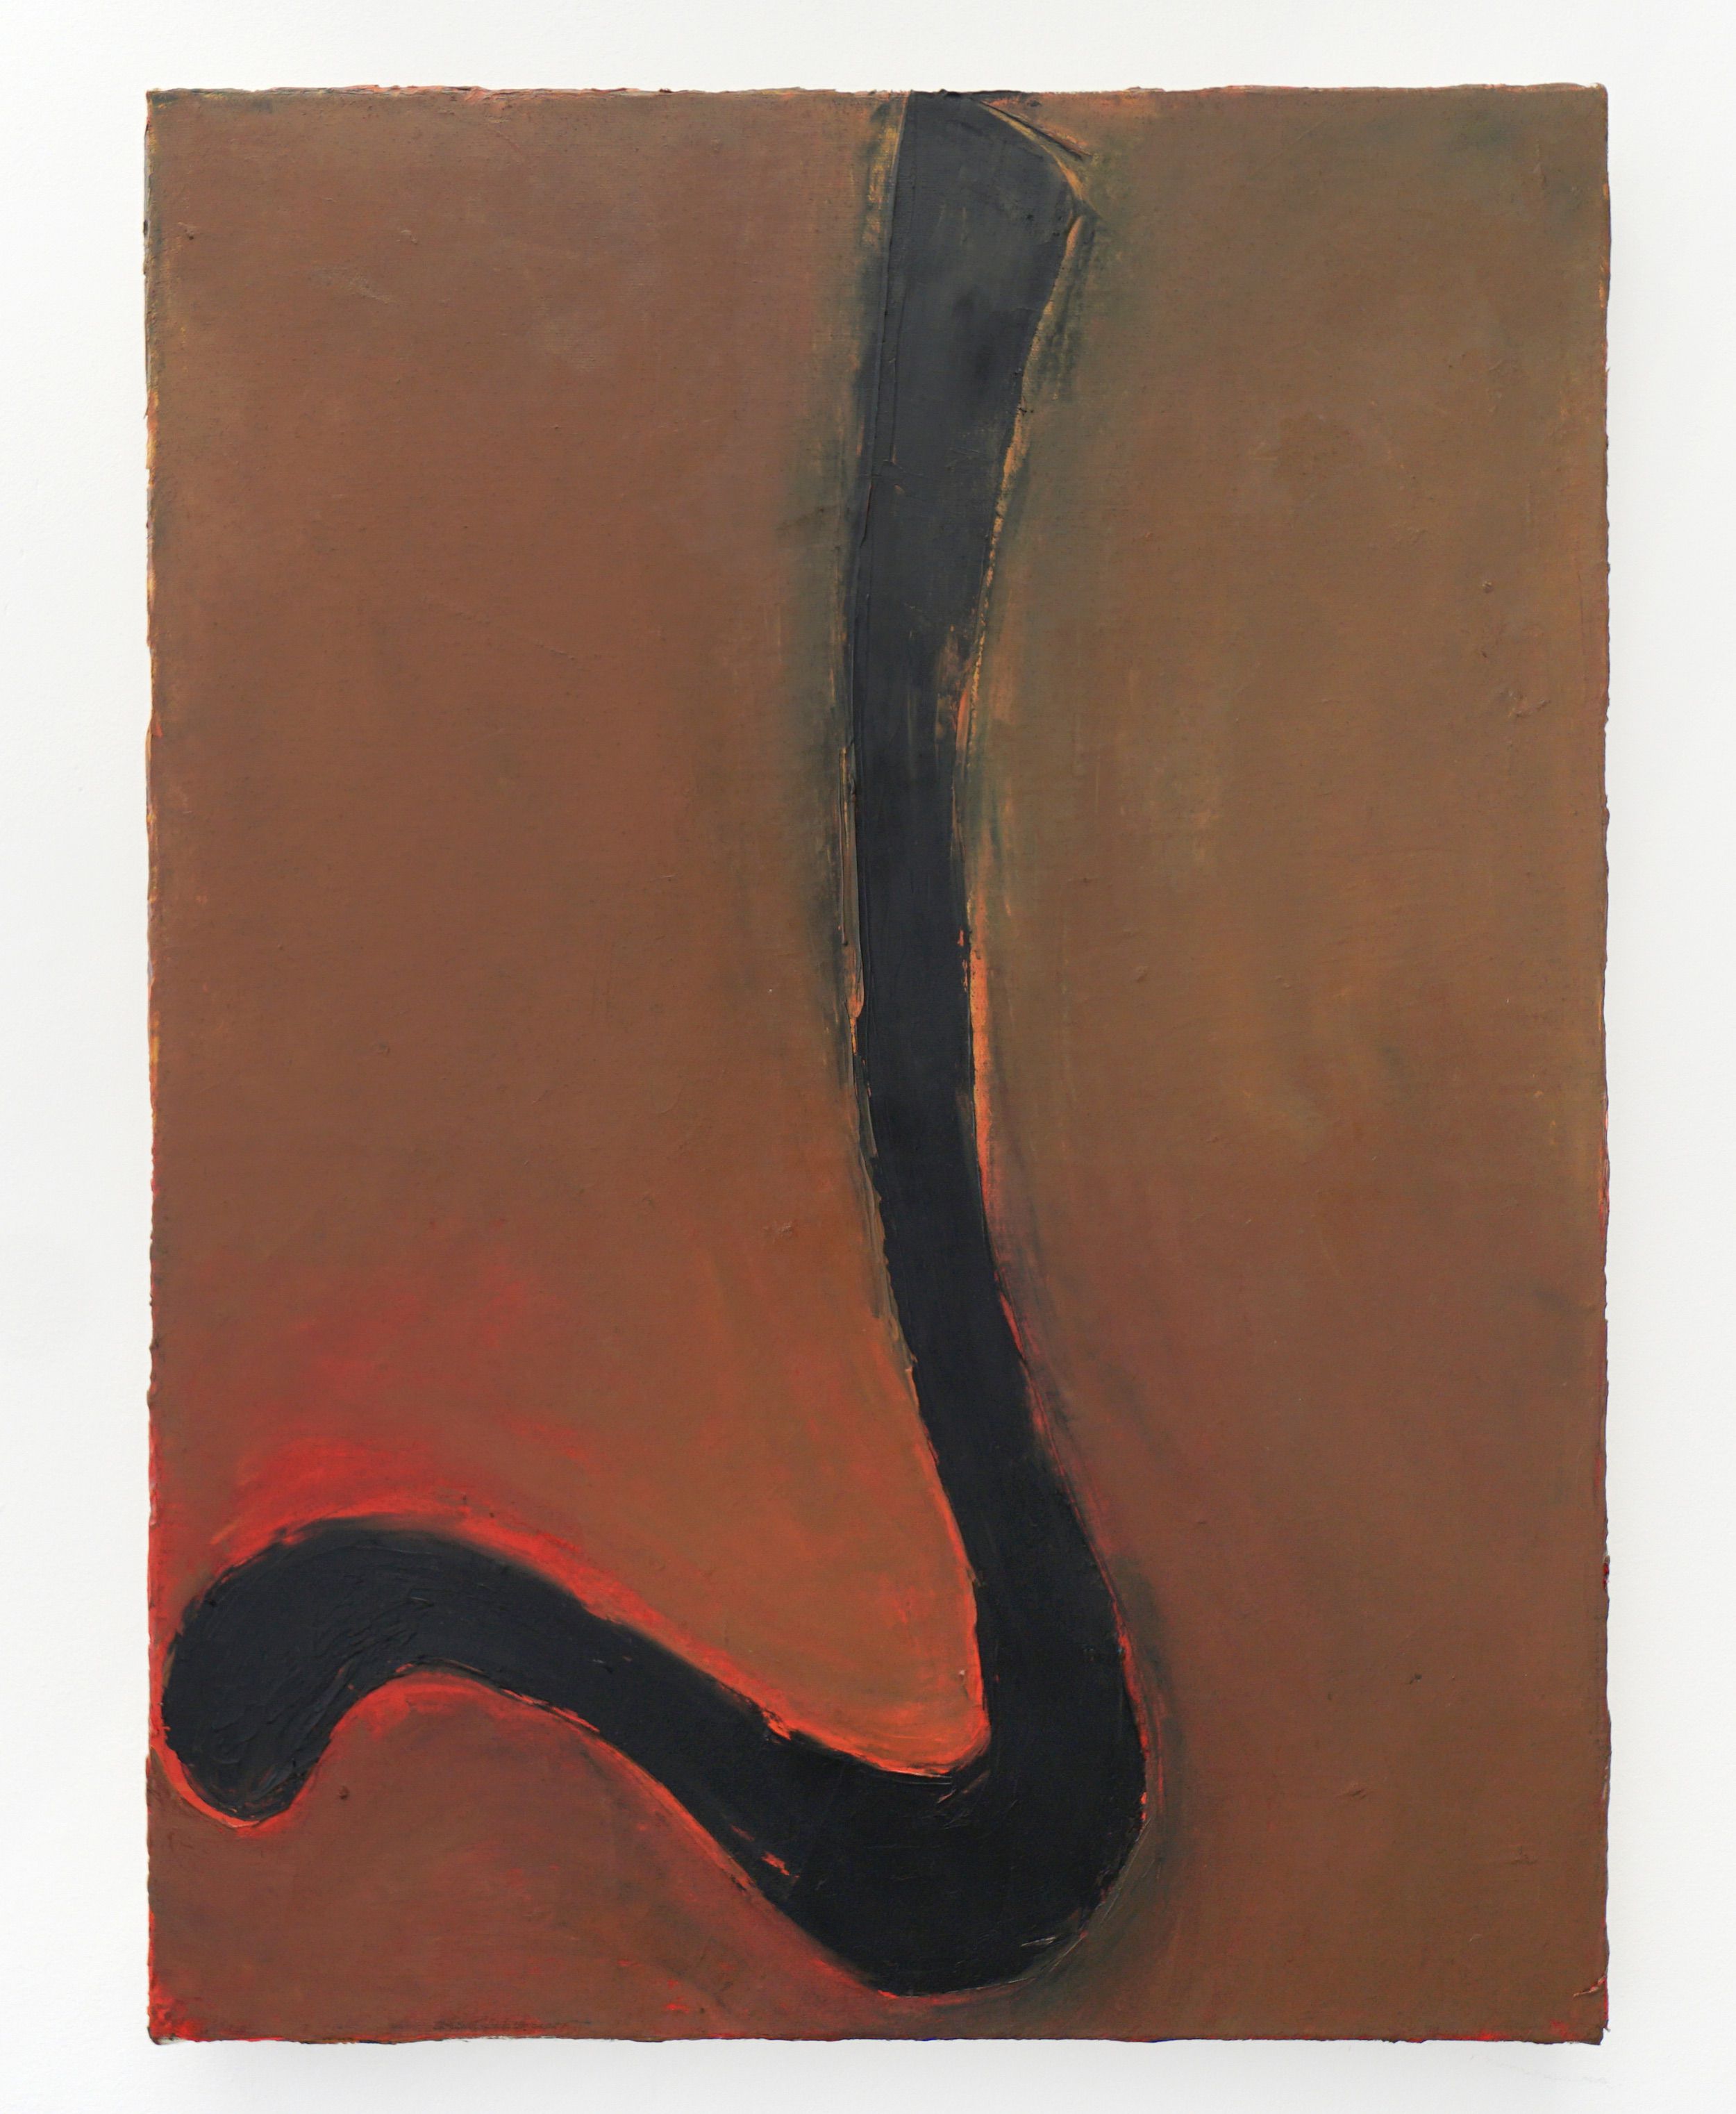  Keith J. Varadi  Nasty Jazz , 2019 Oil and canvas 24 x 18 inches 